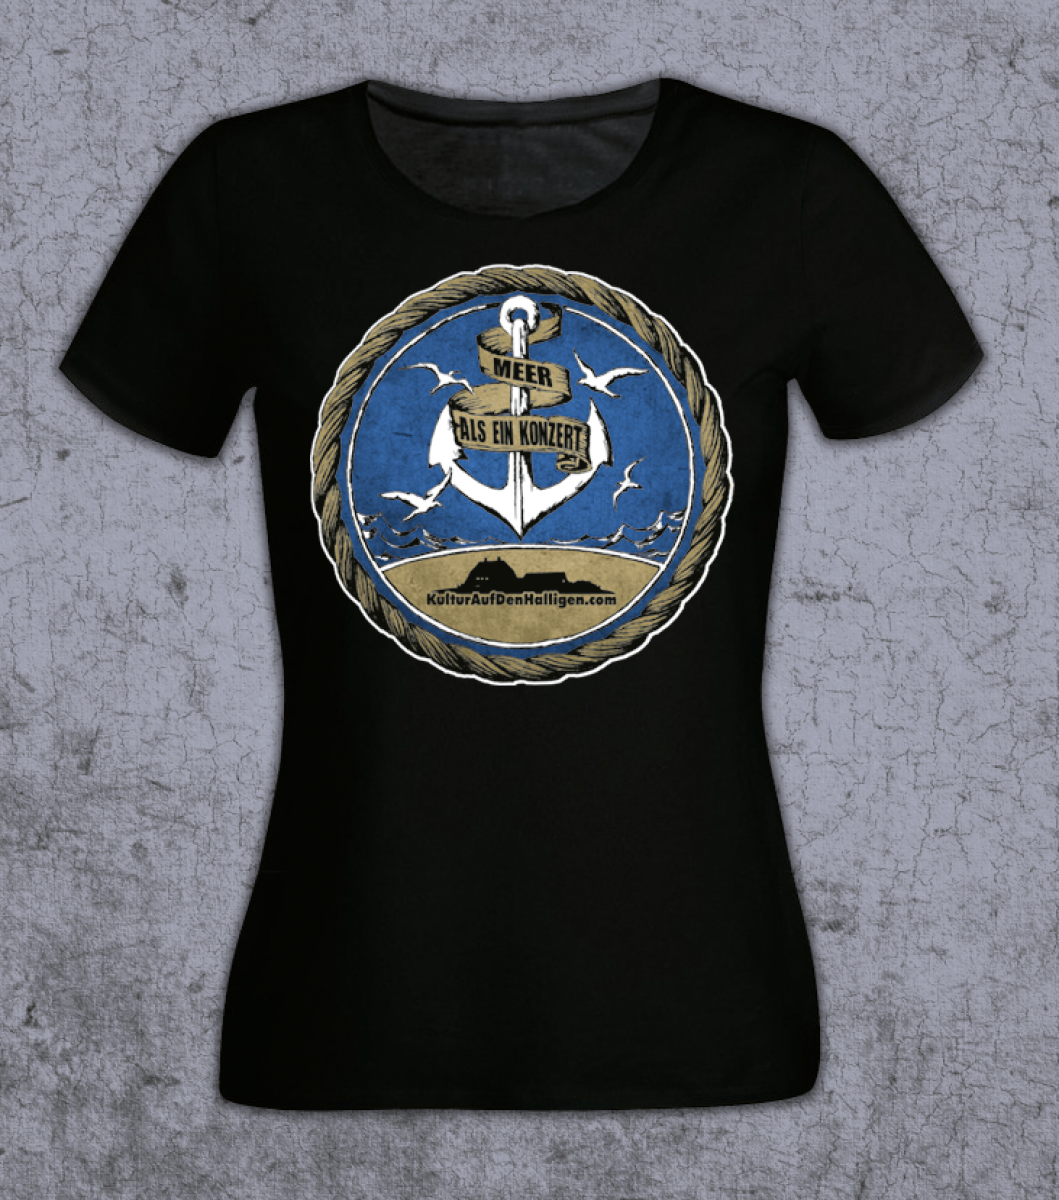 Meer als ein Konzert – Girlie Shirt (blau)